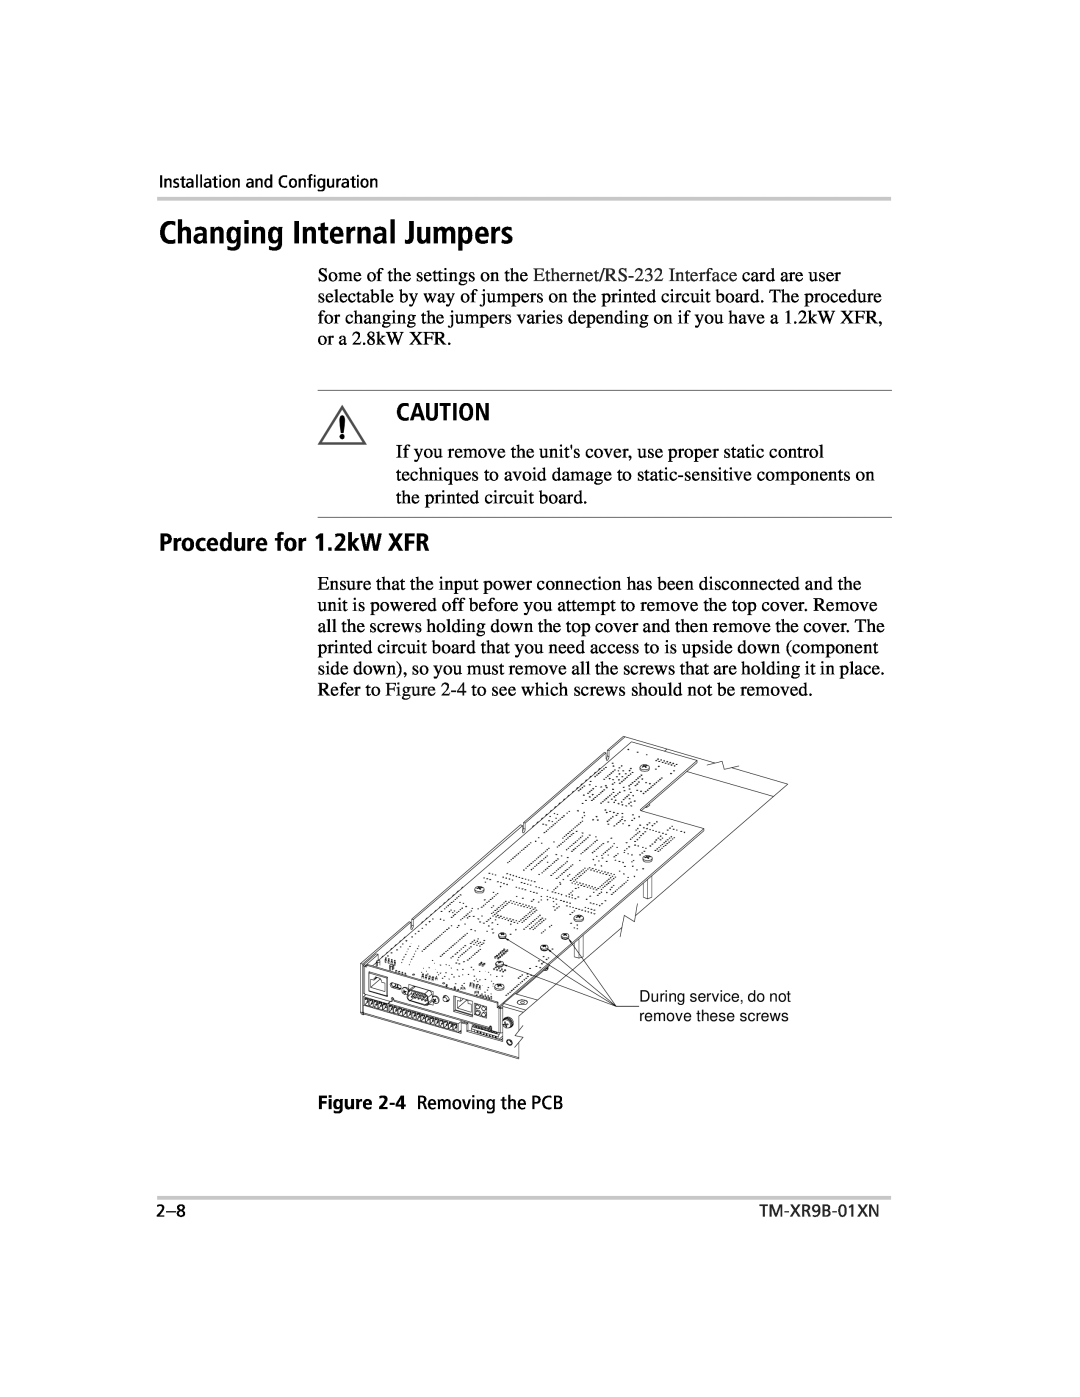 Xantrex Technology ENET-XFR3 manual Changing Internal Jumpers, Procedure for 1.2kW XFR 